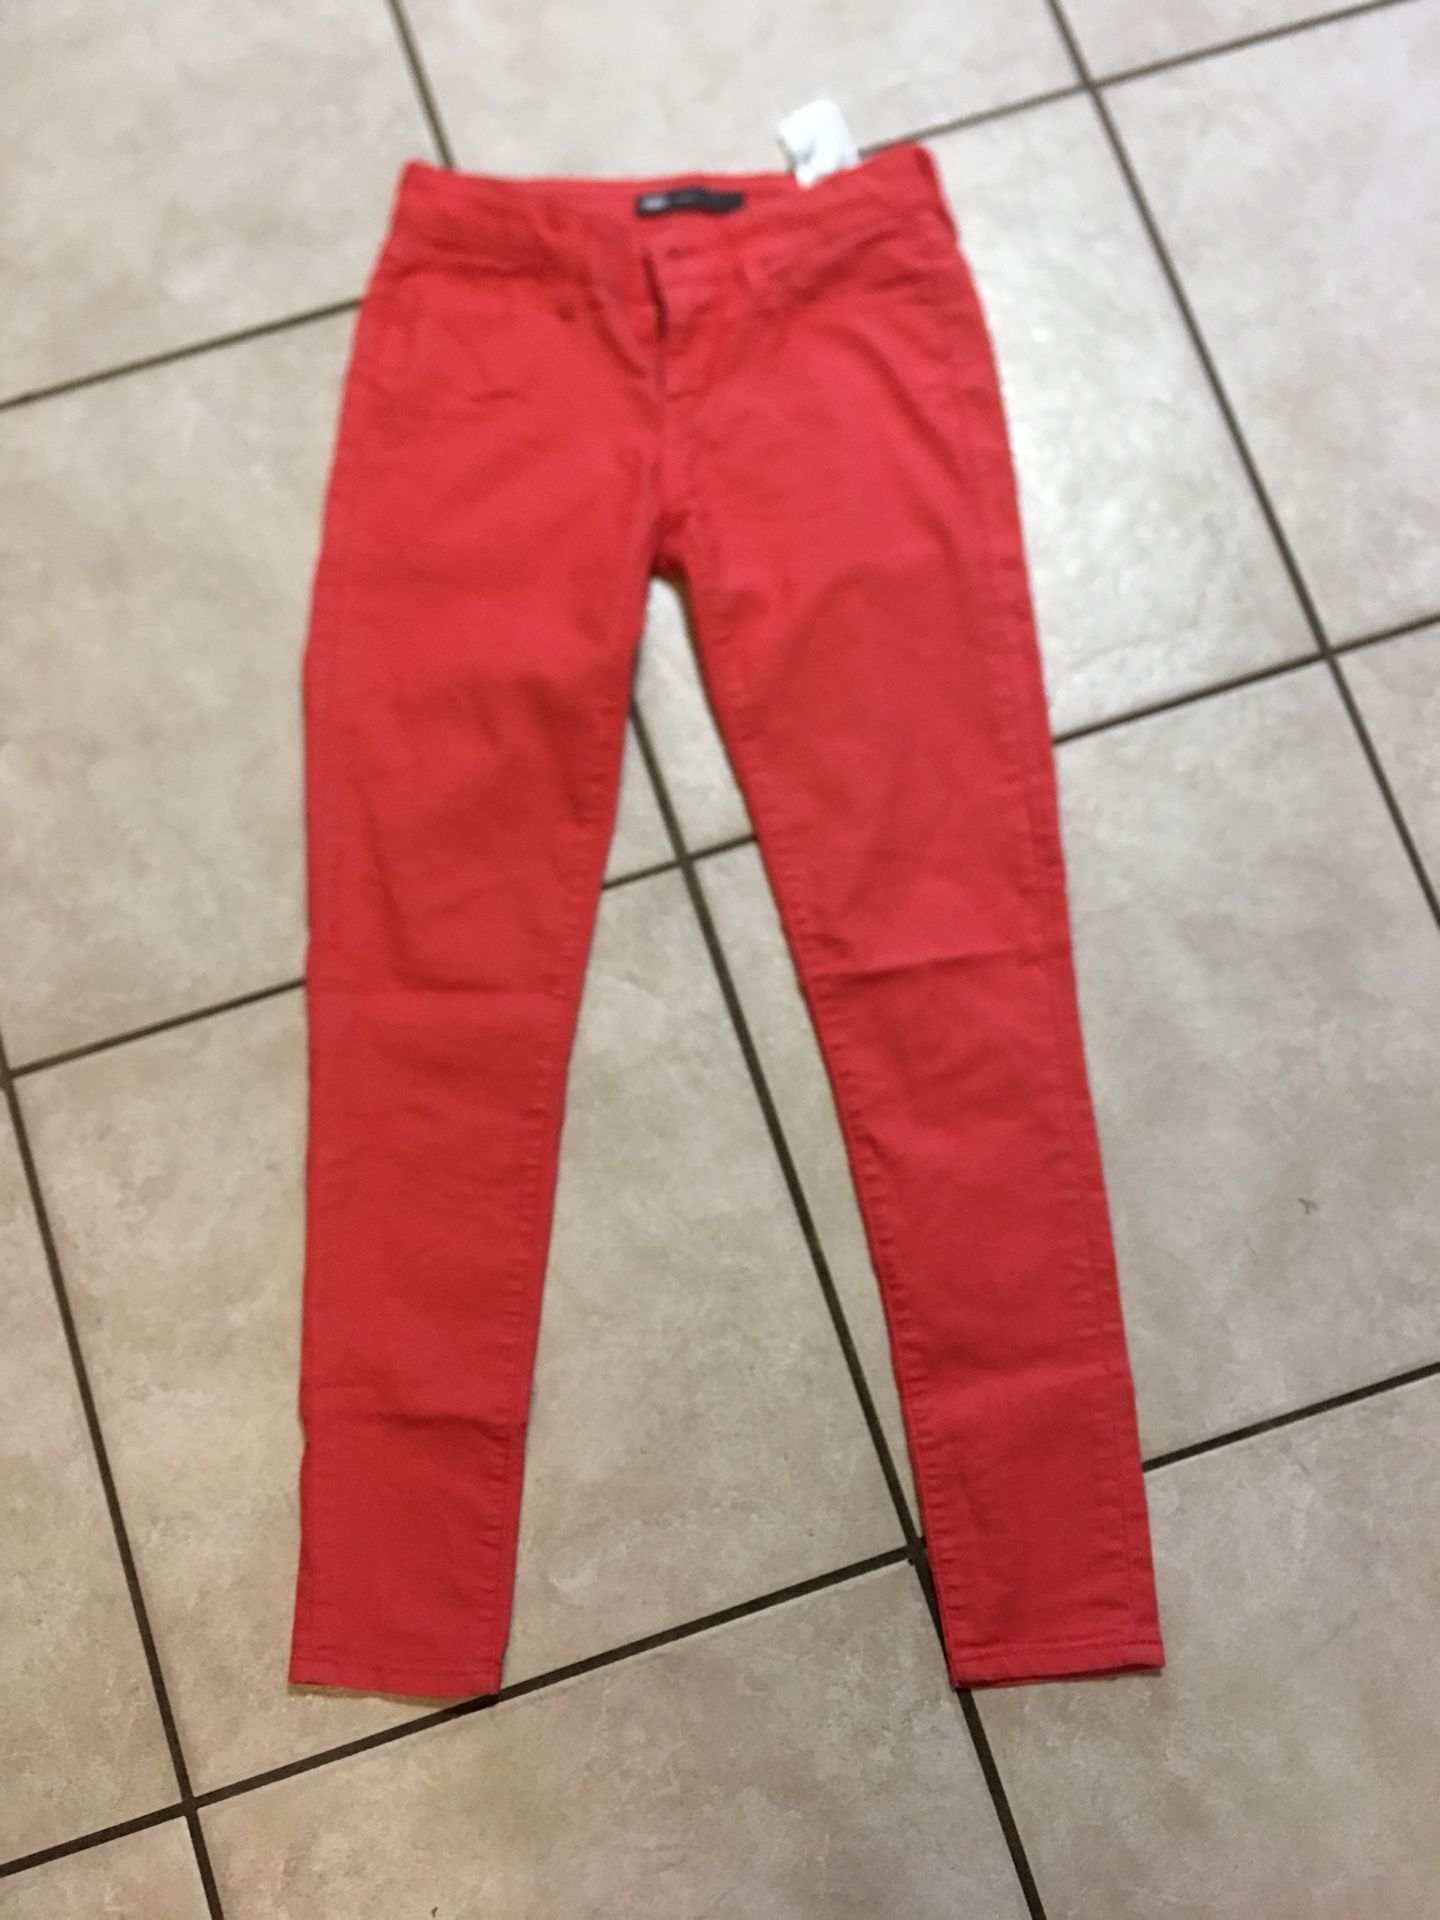 LEVI jeans coral legging jeans size 2W